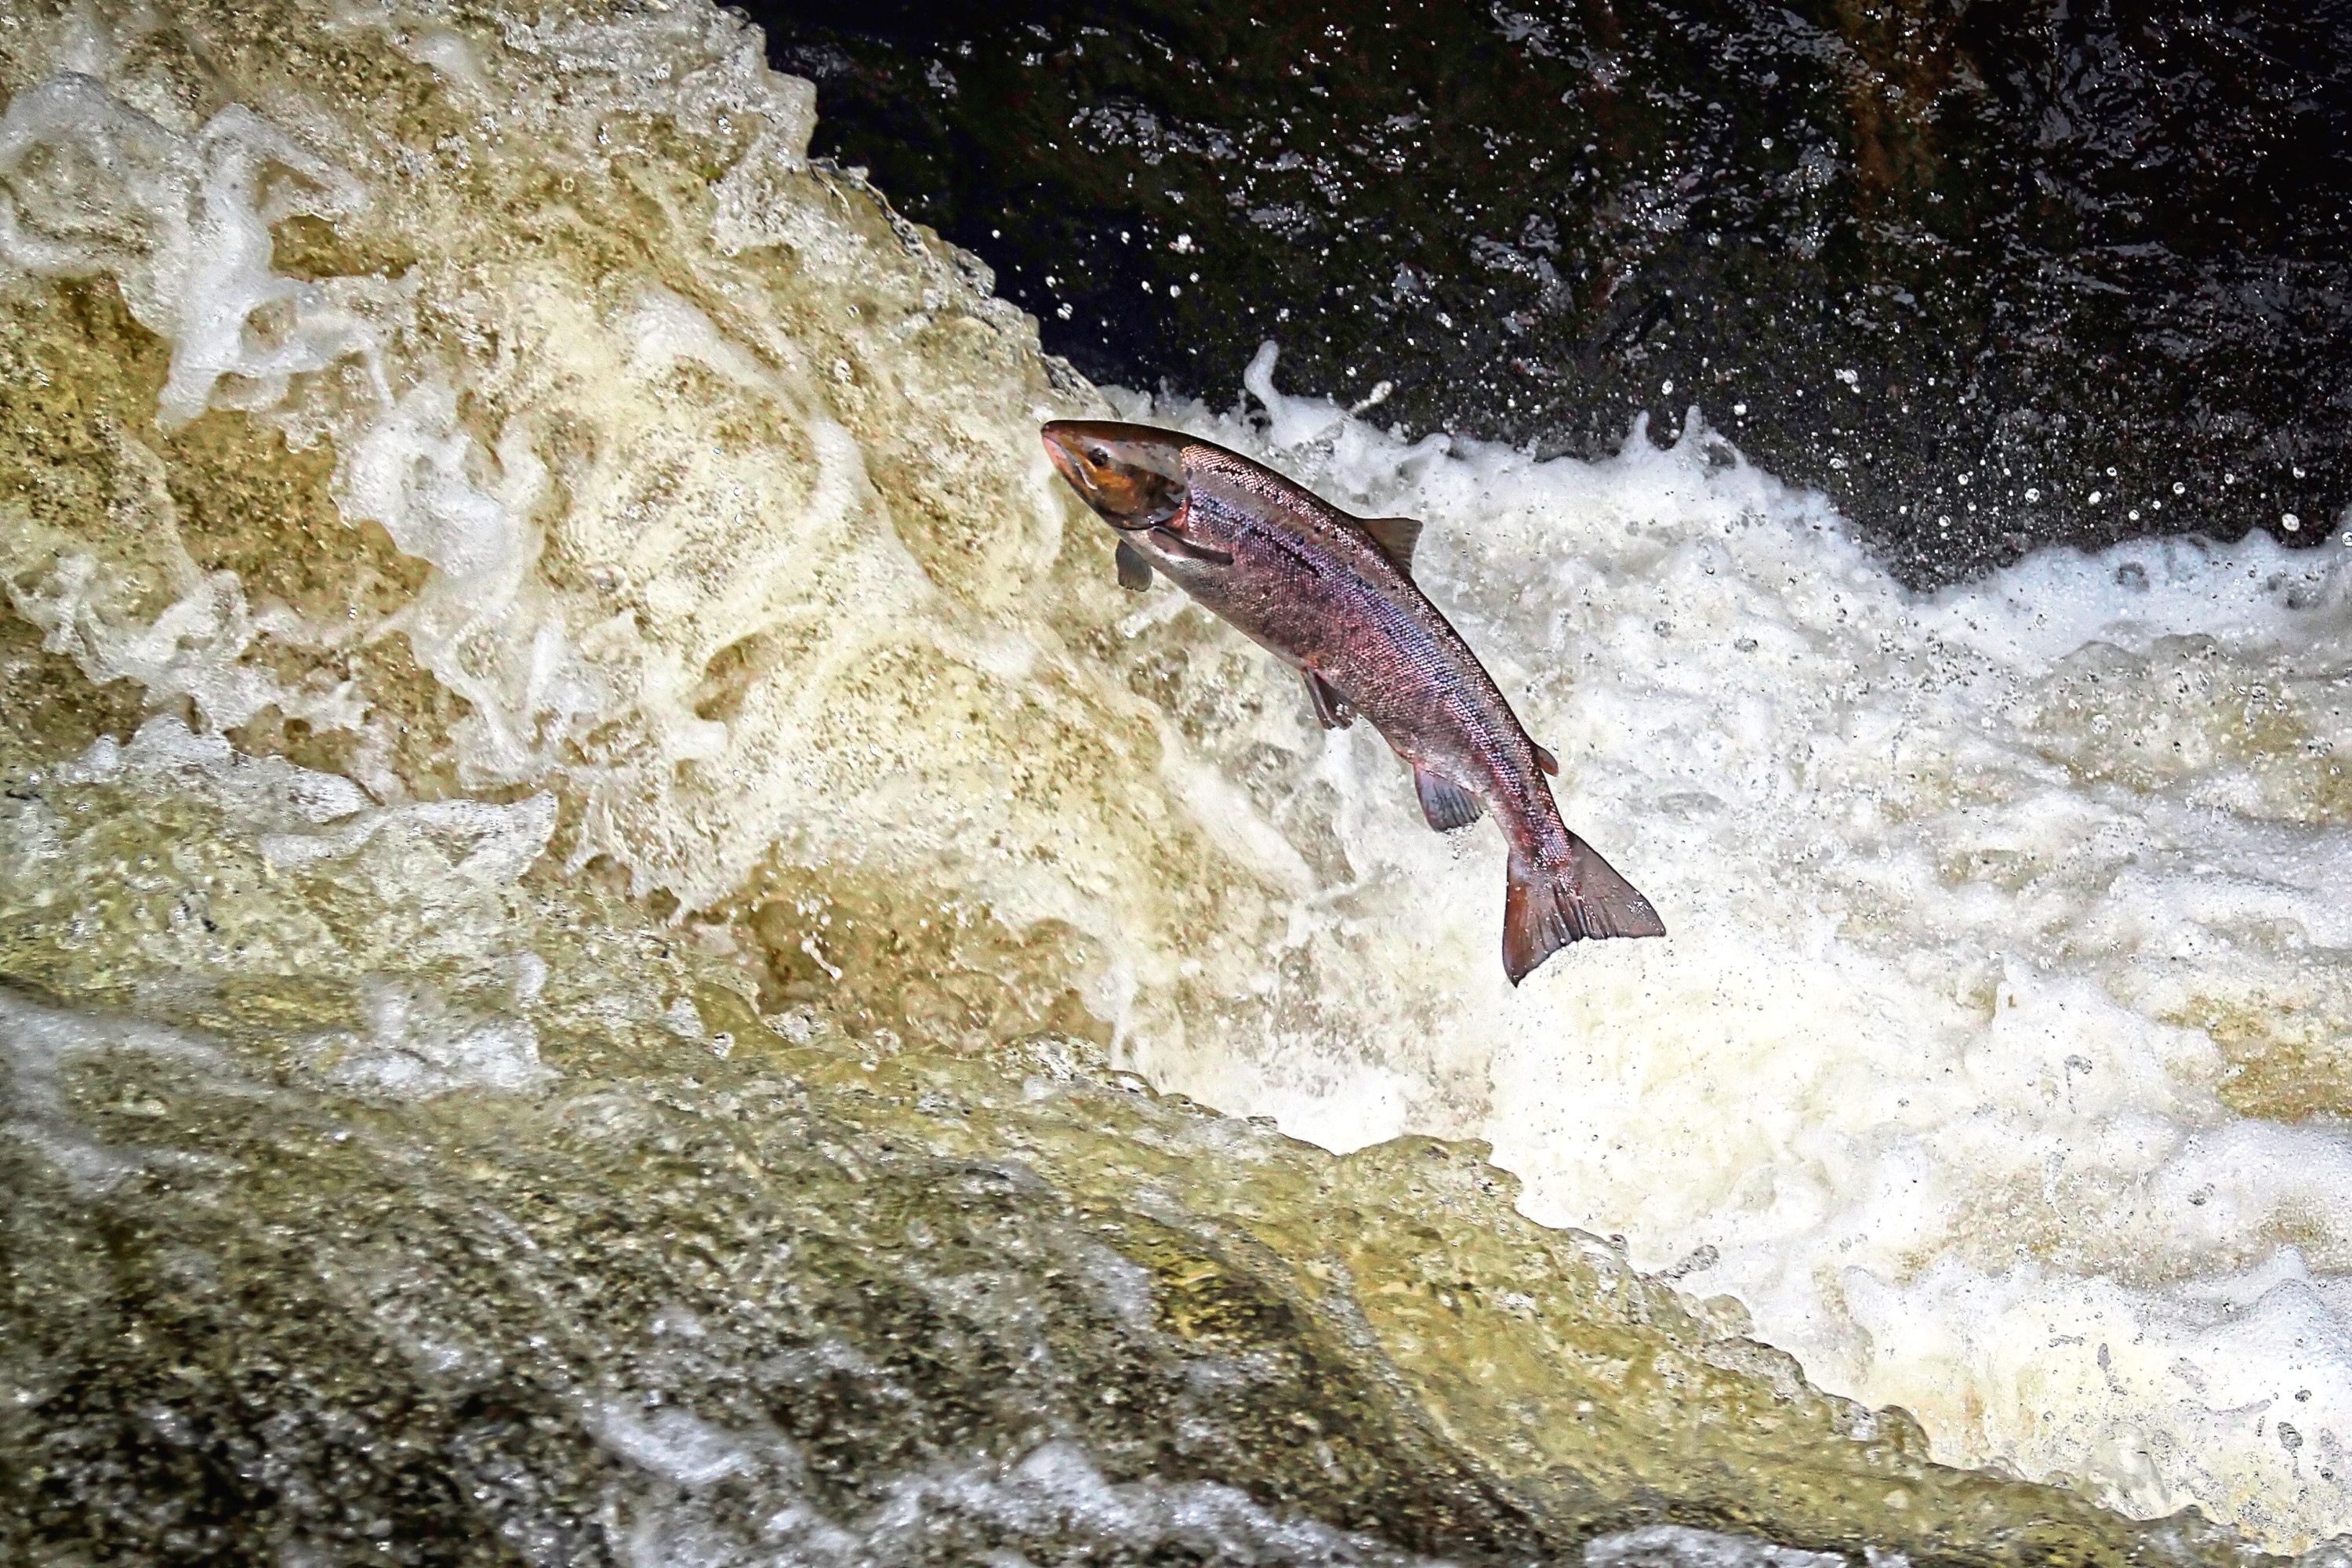 Atlantic Salmon leaping in turbulent waterfalls in Perthshire